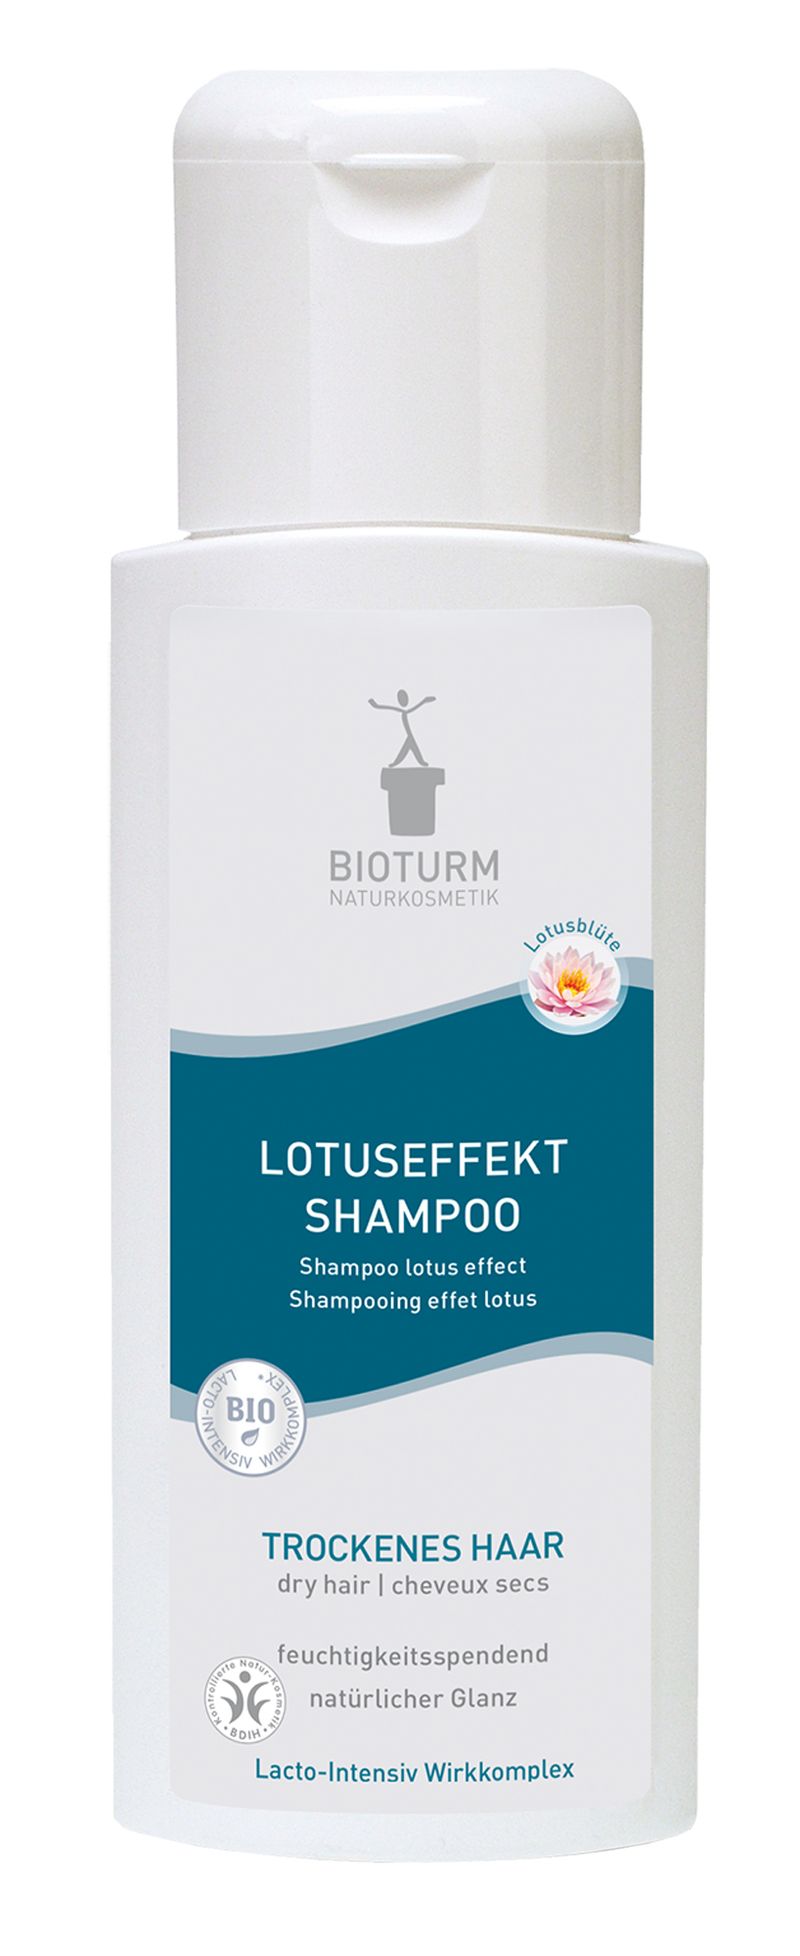 BIOTURM Lotuseffekt Shampoo